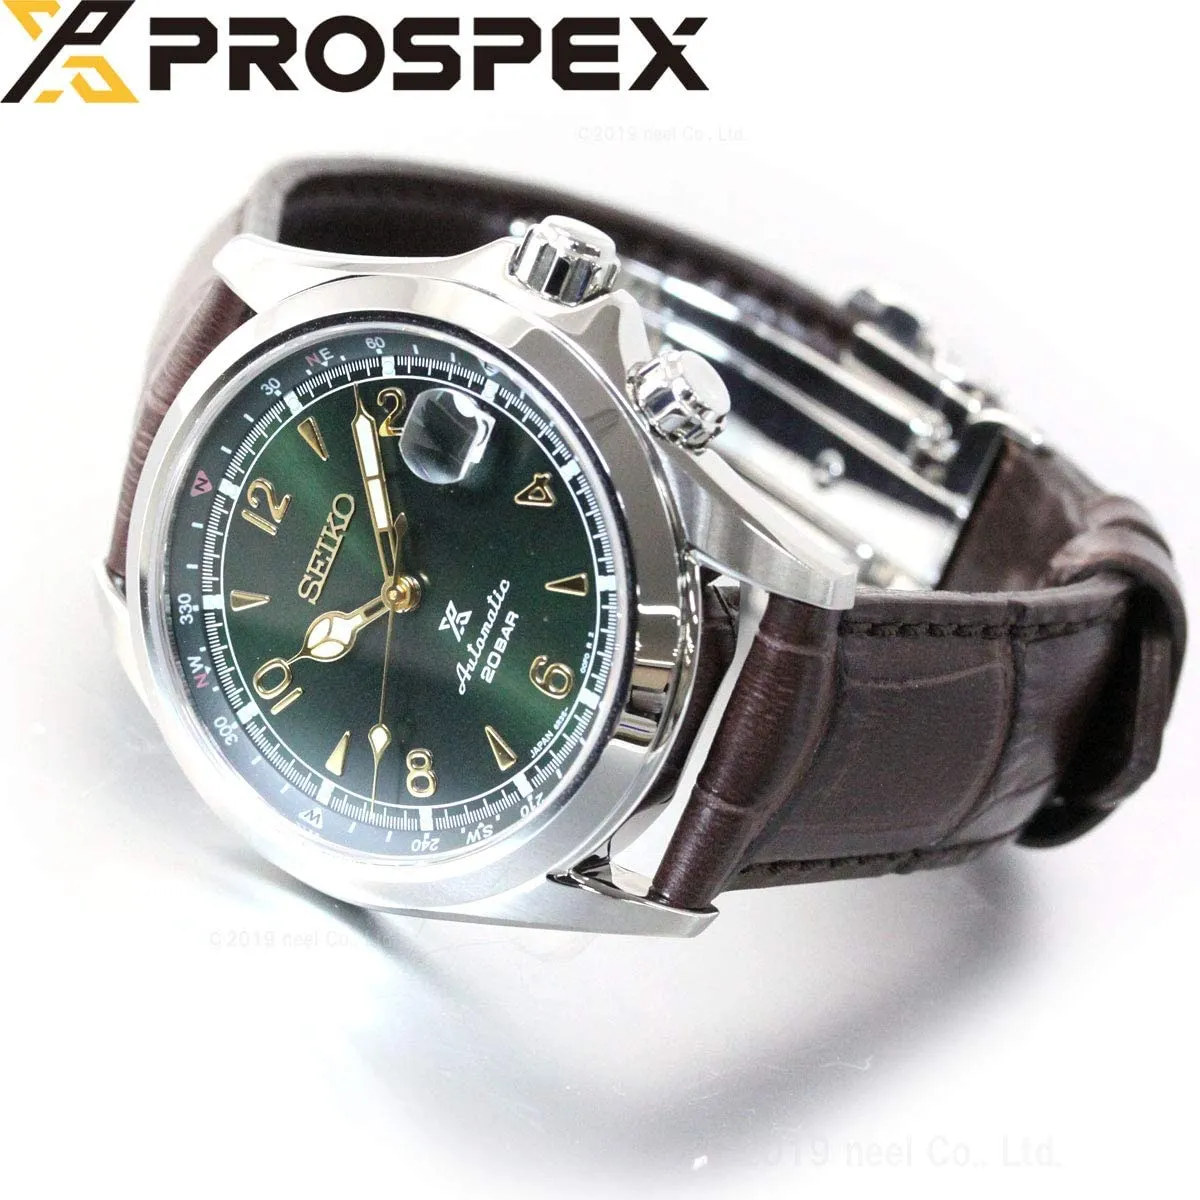 Đồng hồ Seiko cổ sẵn sàng (SEIKO SBDC091 Watch) Seiko Prospex Alpinist  Limited Model SBDC091 Made